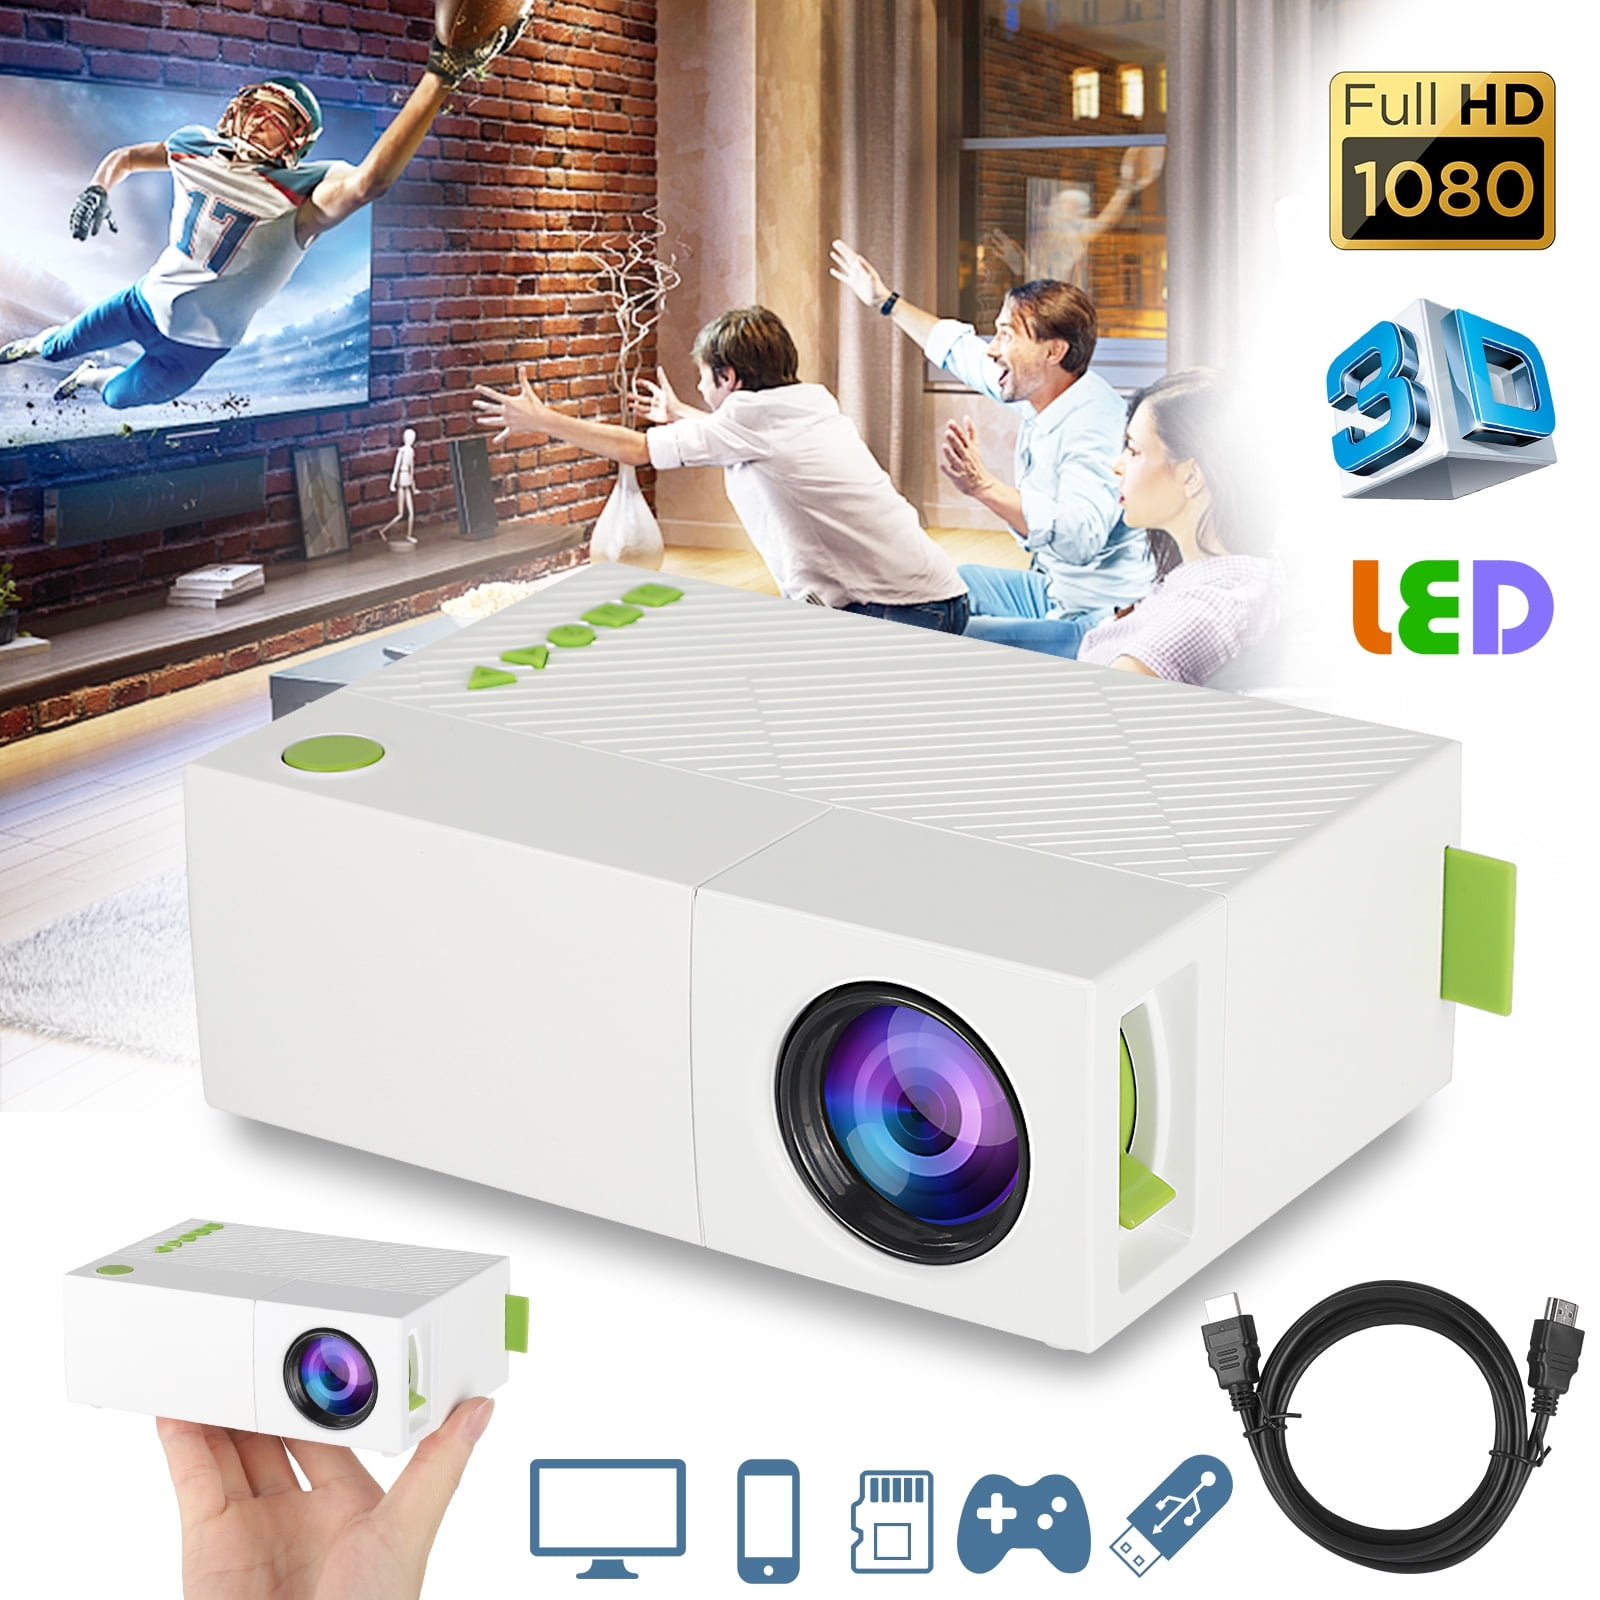 Mini Projector, Portable Video Projector, Full HD 1080P 60¡± Display